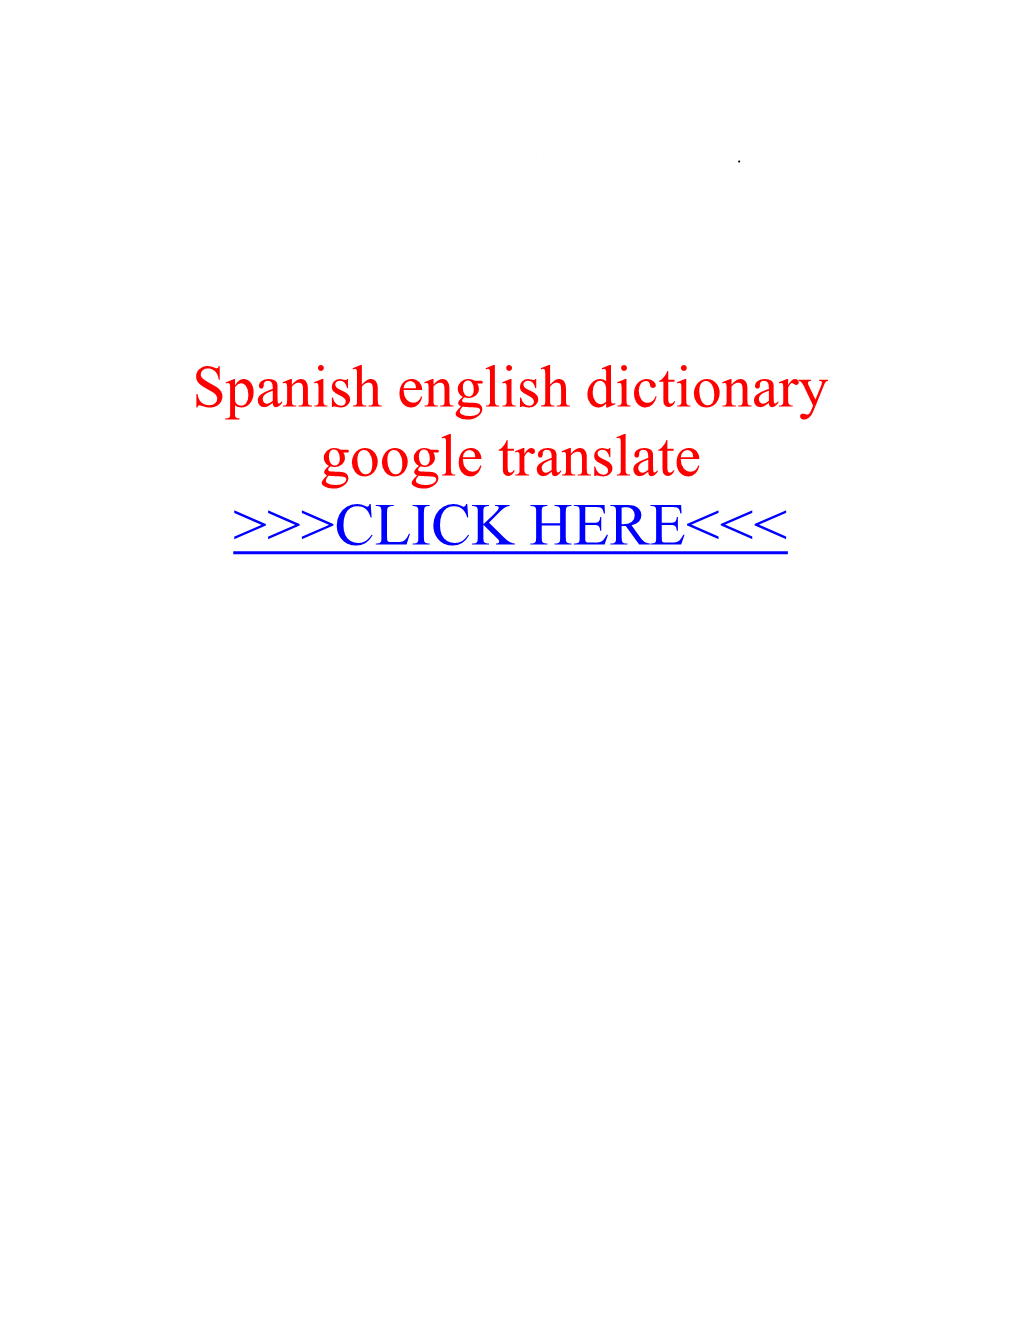 Spanish English Dictionary Google Translate